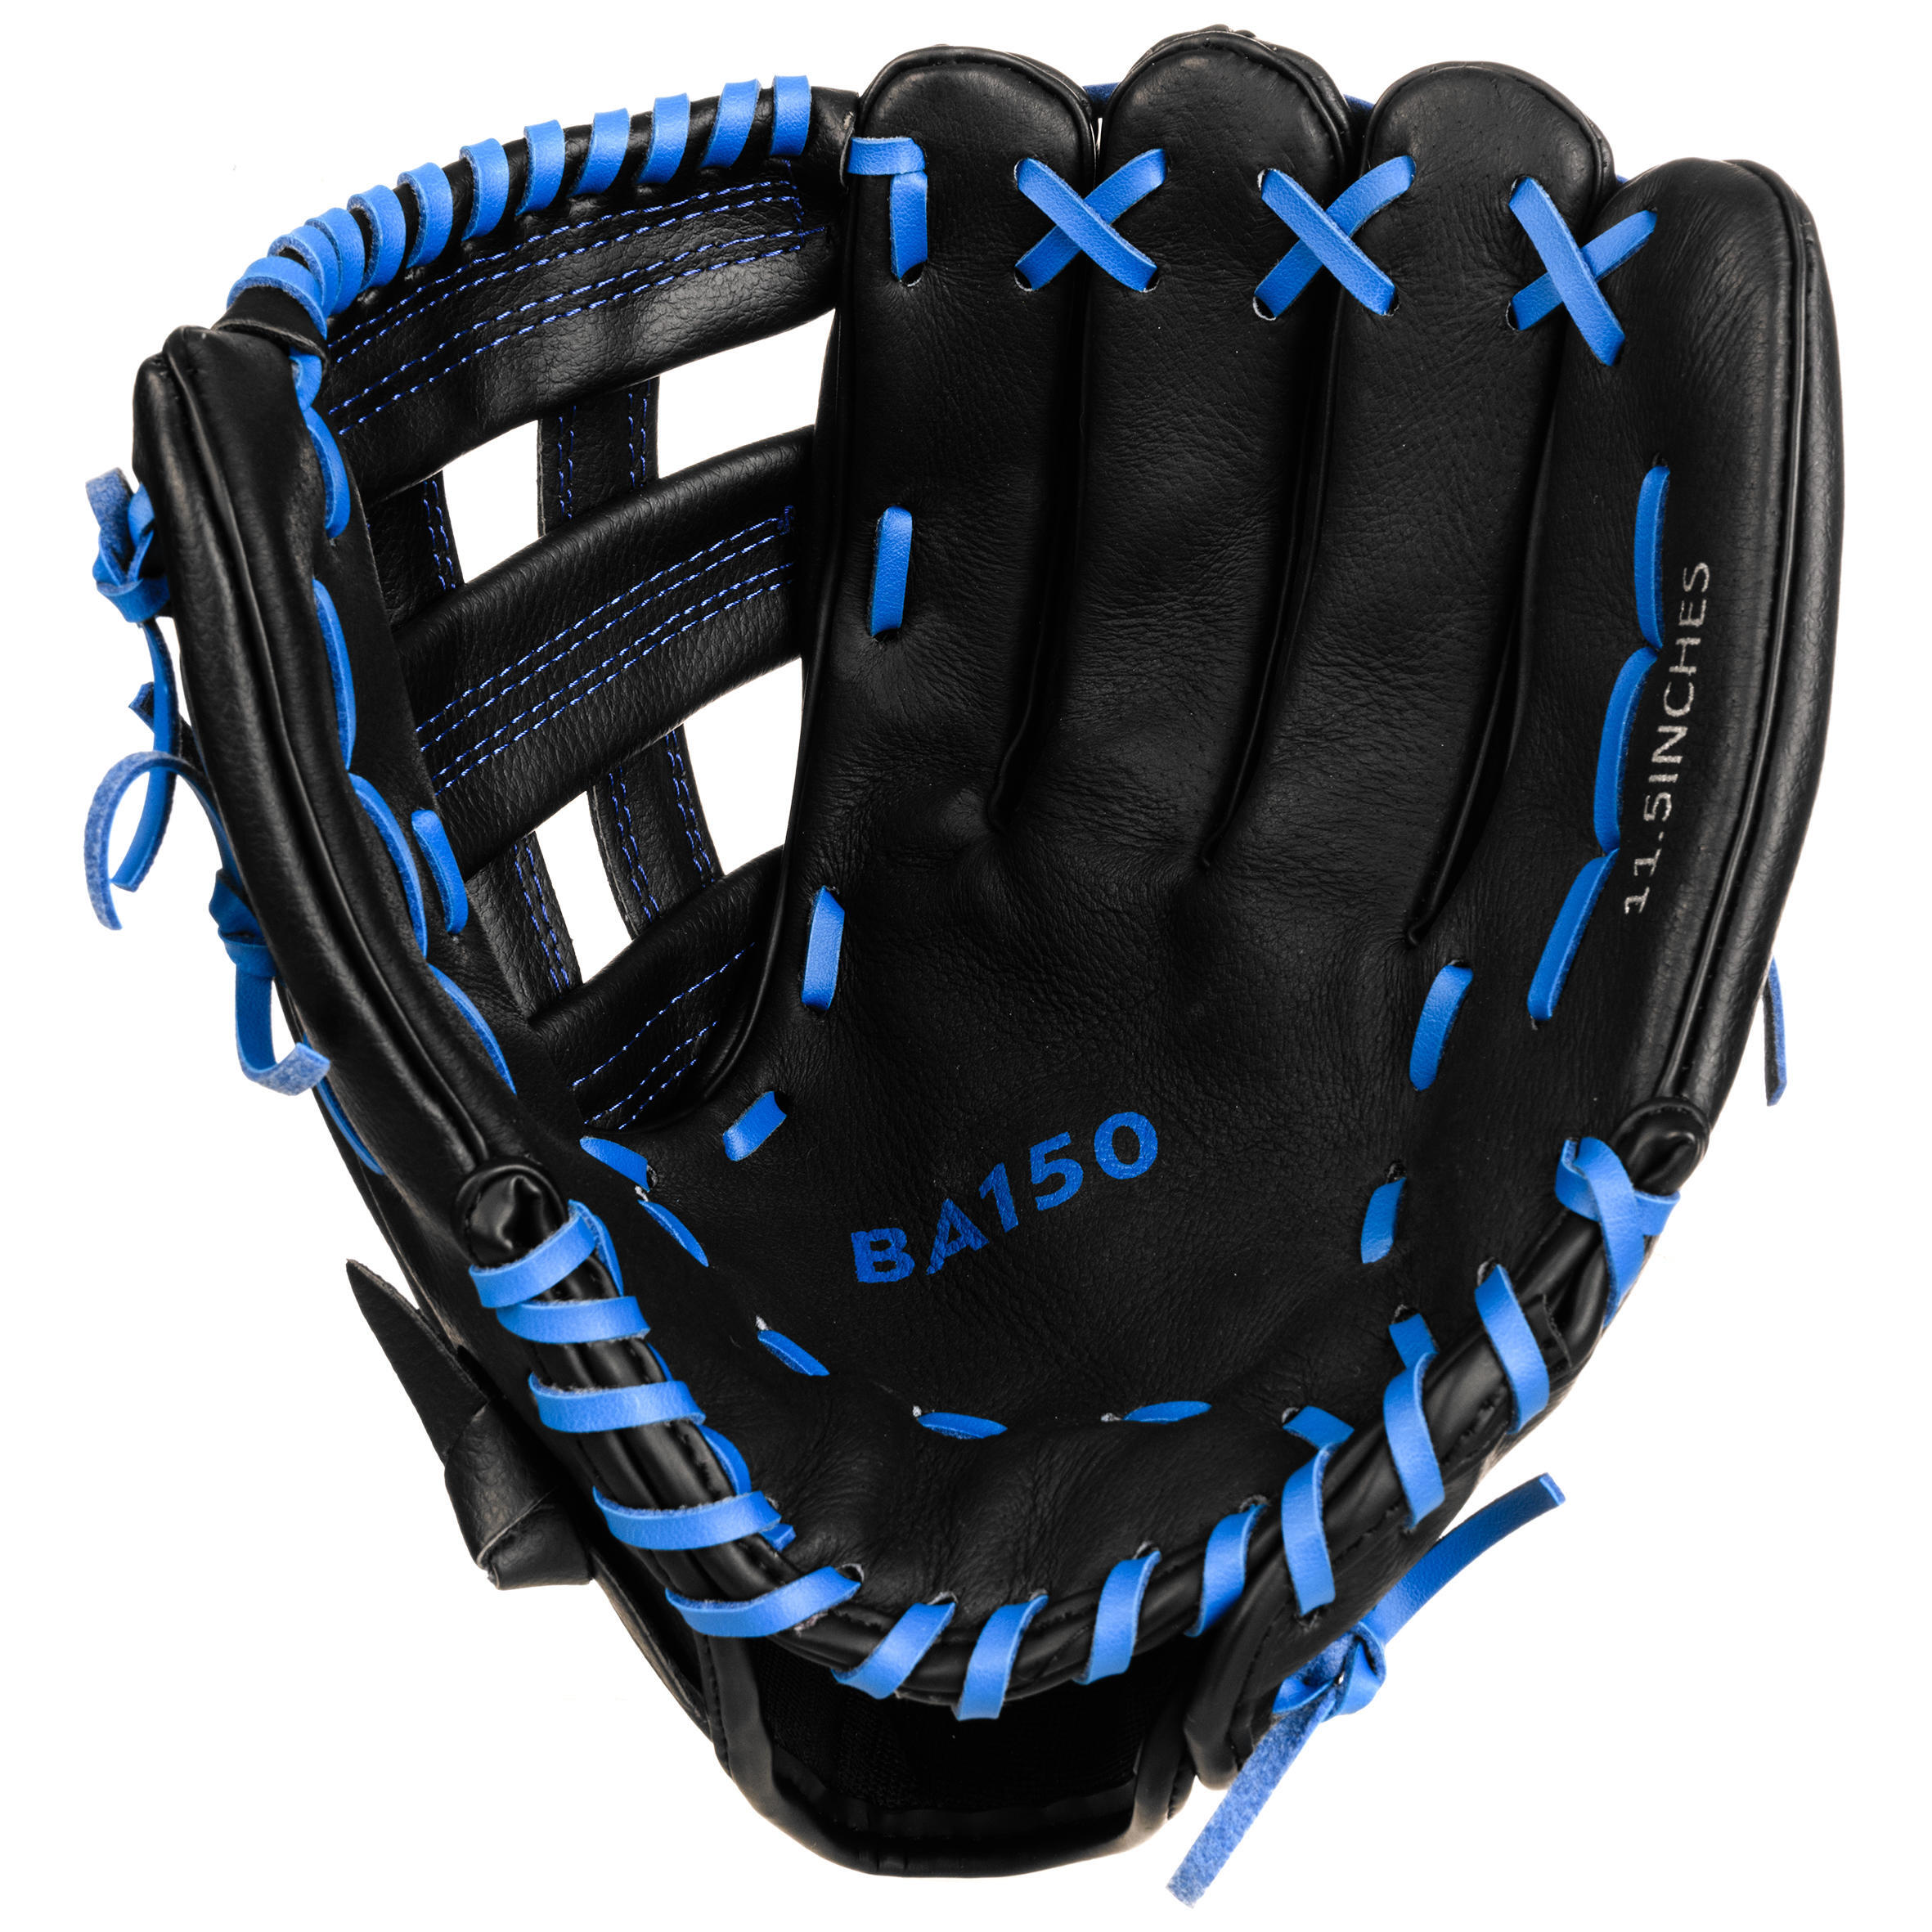 Baseball glove right-hand throw adult -  BA150 blue 2/10